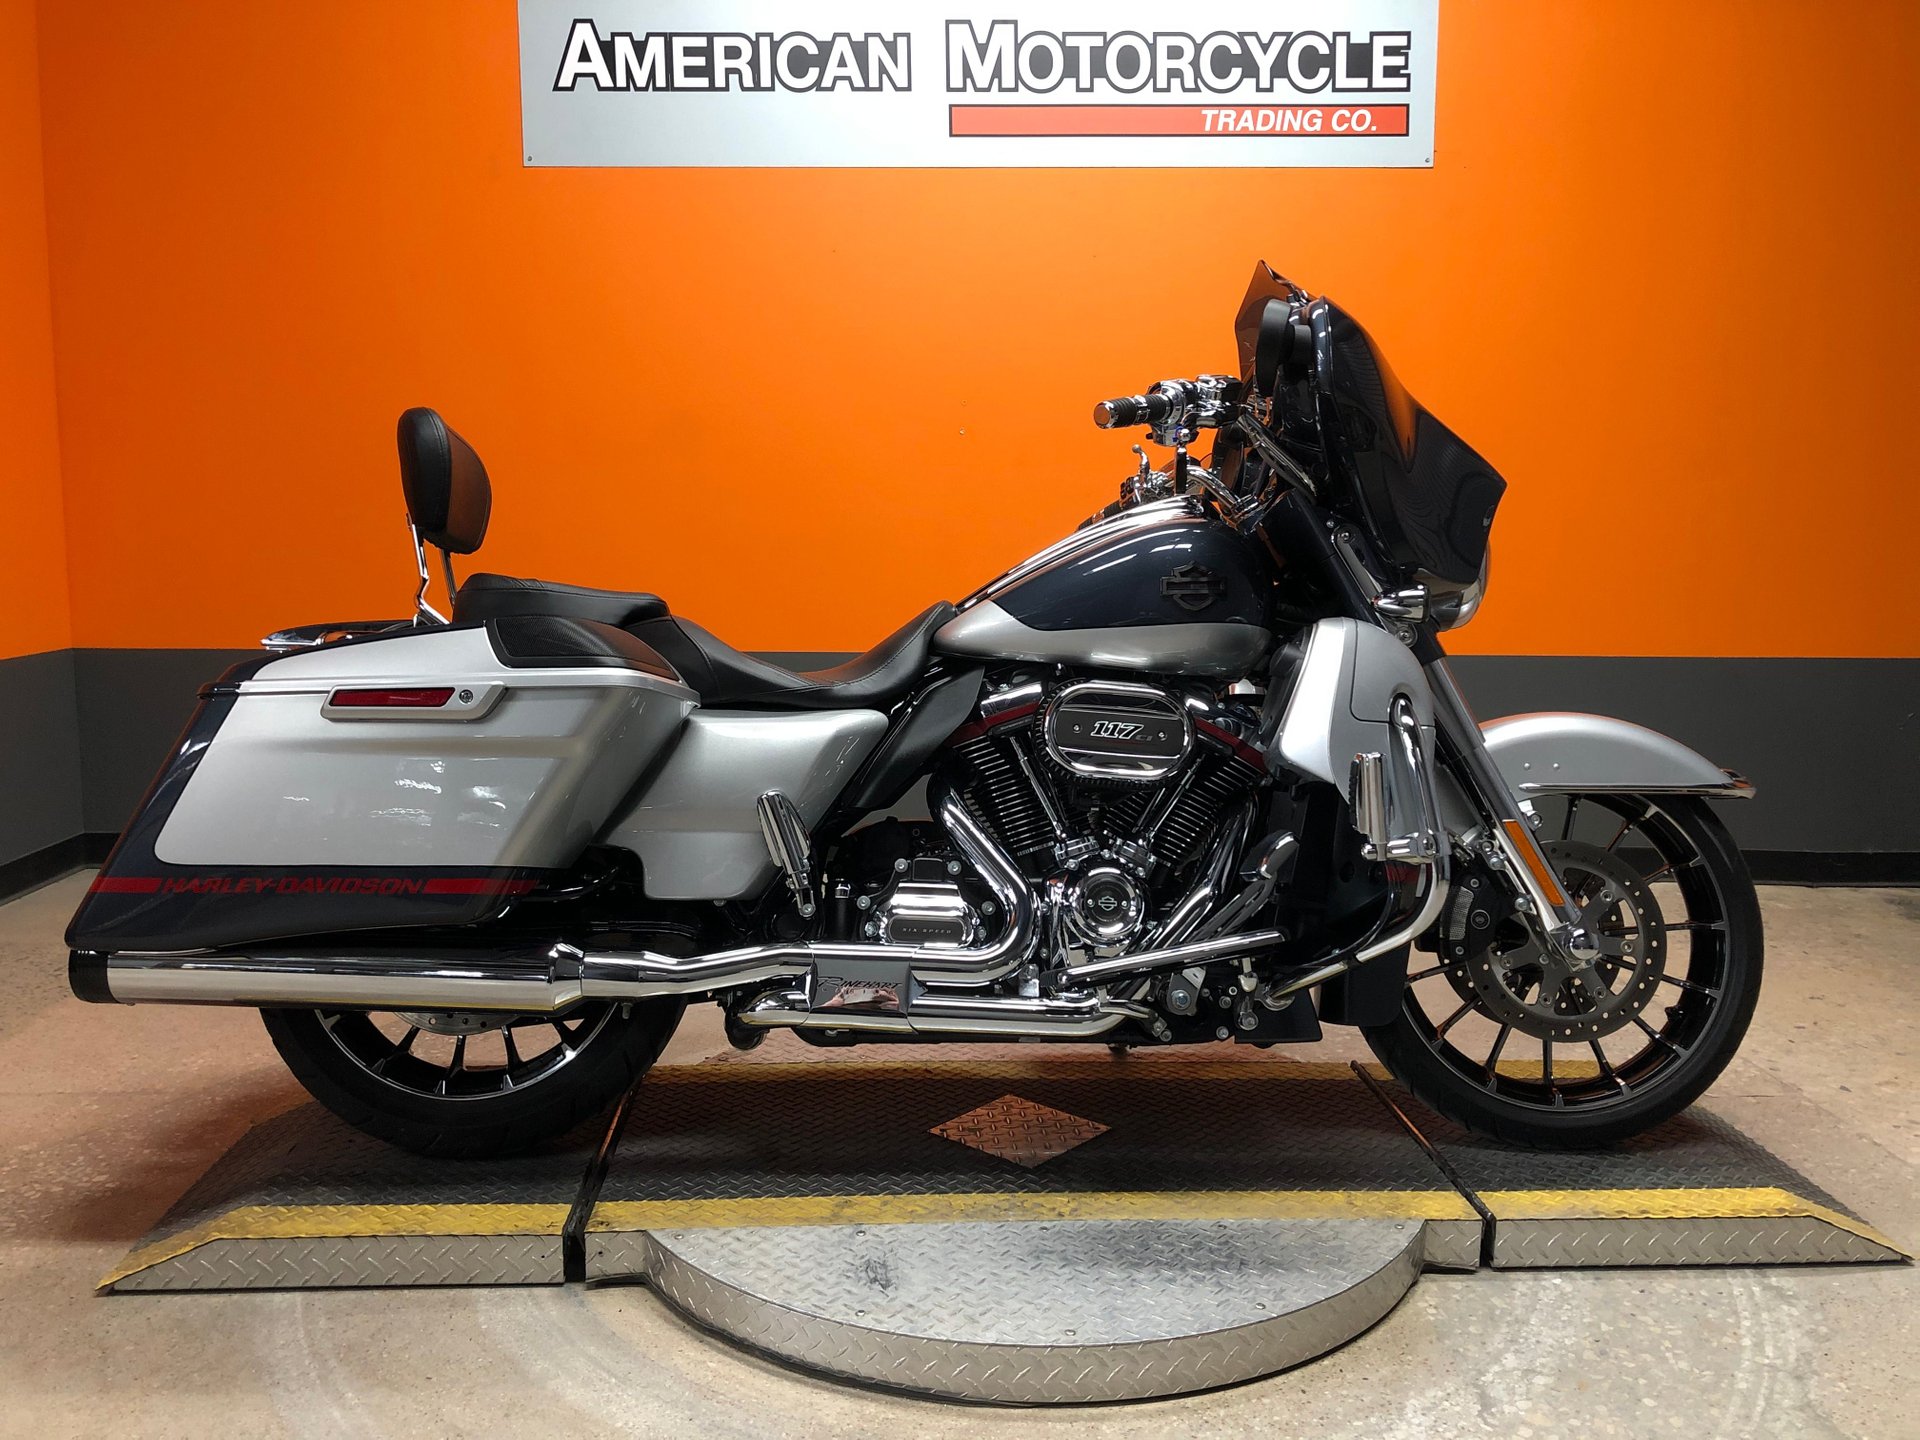 2019 Harley Davidson Cvo Street Glide American Motorcycle Trading Company Used Harley Davidson Motorcycles